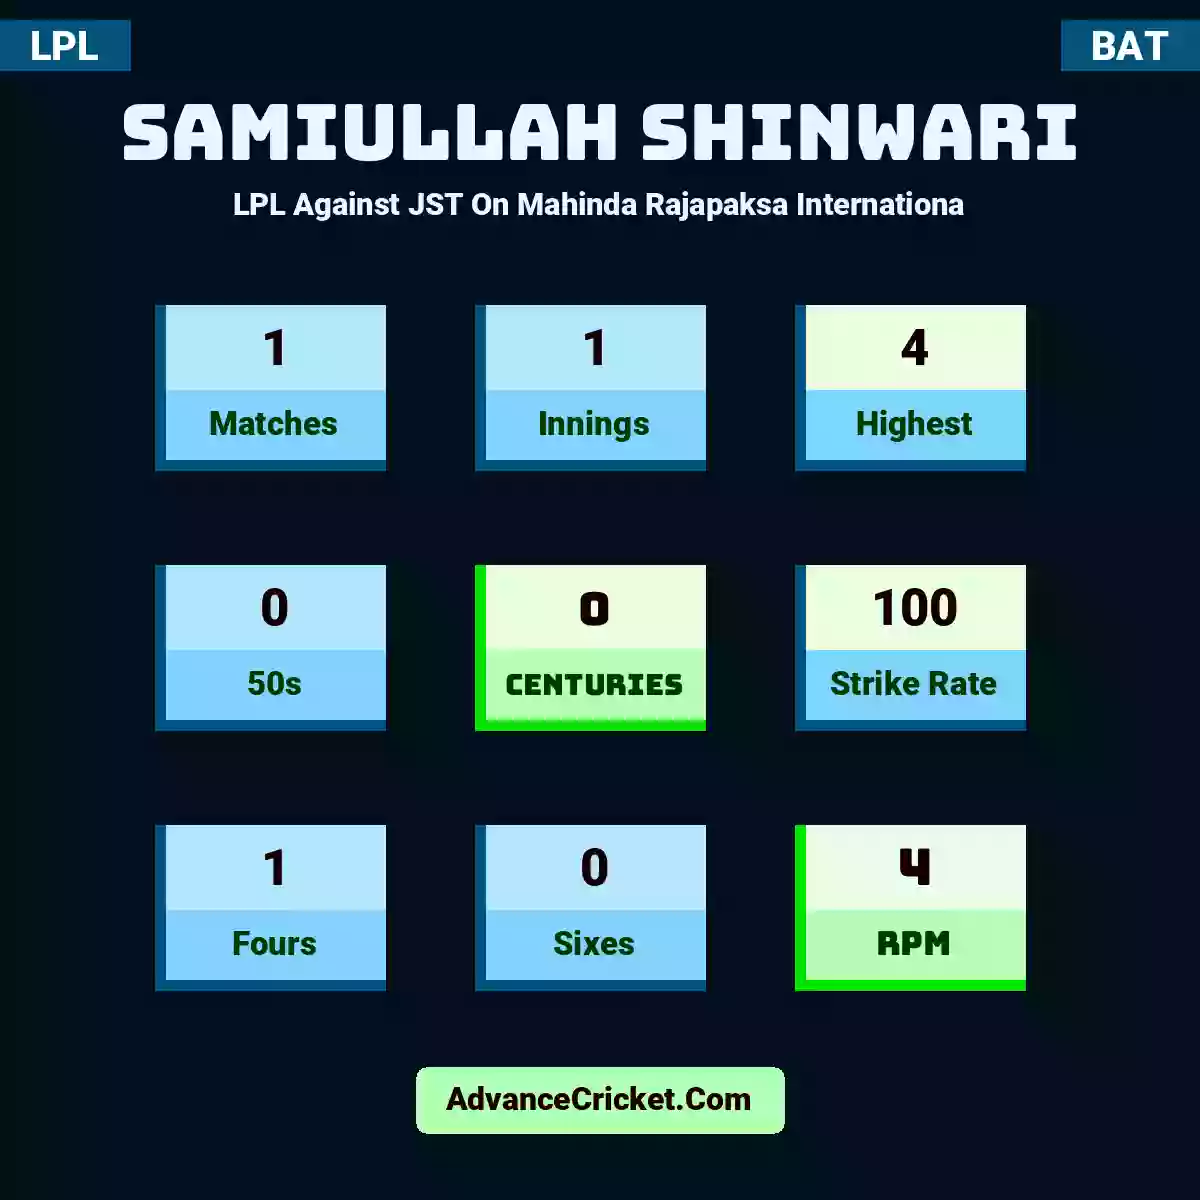 Samiullah Shinwari LPL  Against JST On Mahinda Rajapaksa Internationa, Samiullah Shinwari played 1 matches, scored 4 runs as highest, 0 half-centuries, and 0 centuries, with a strike rate of 100. S.Shinwari hit 1 fours and 0 sixes, with an RPM of 4.